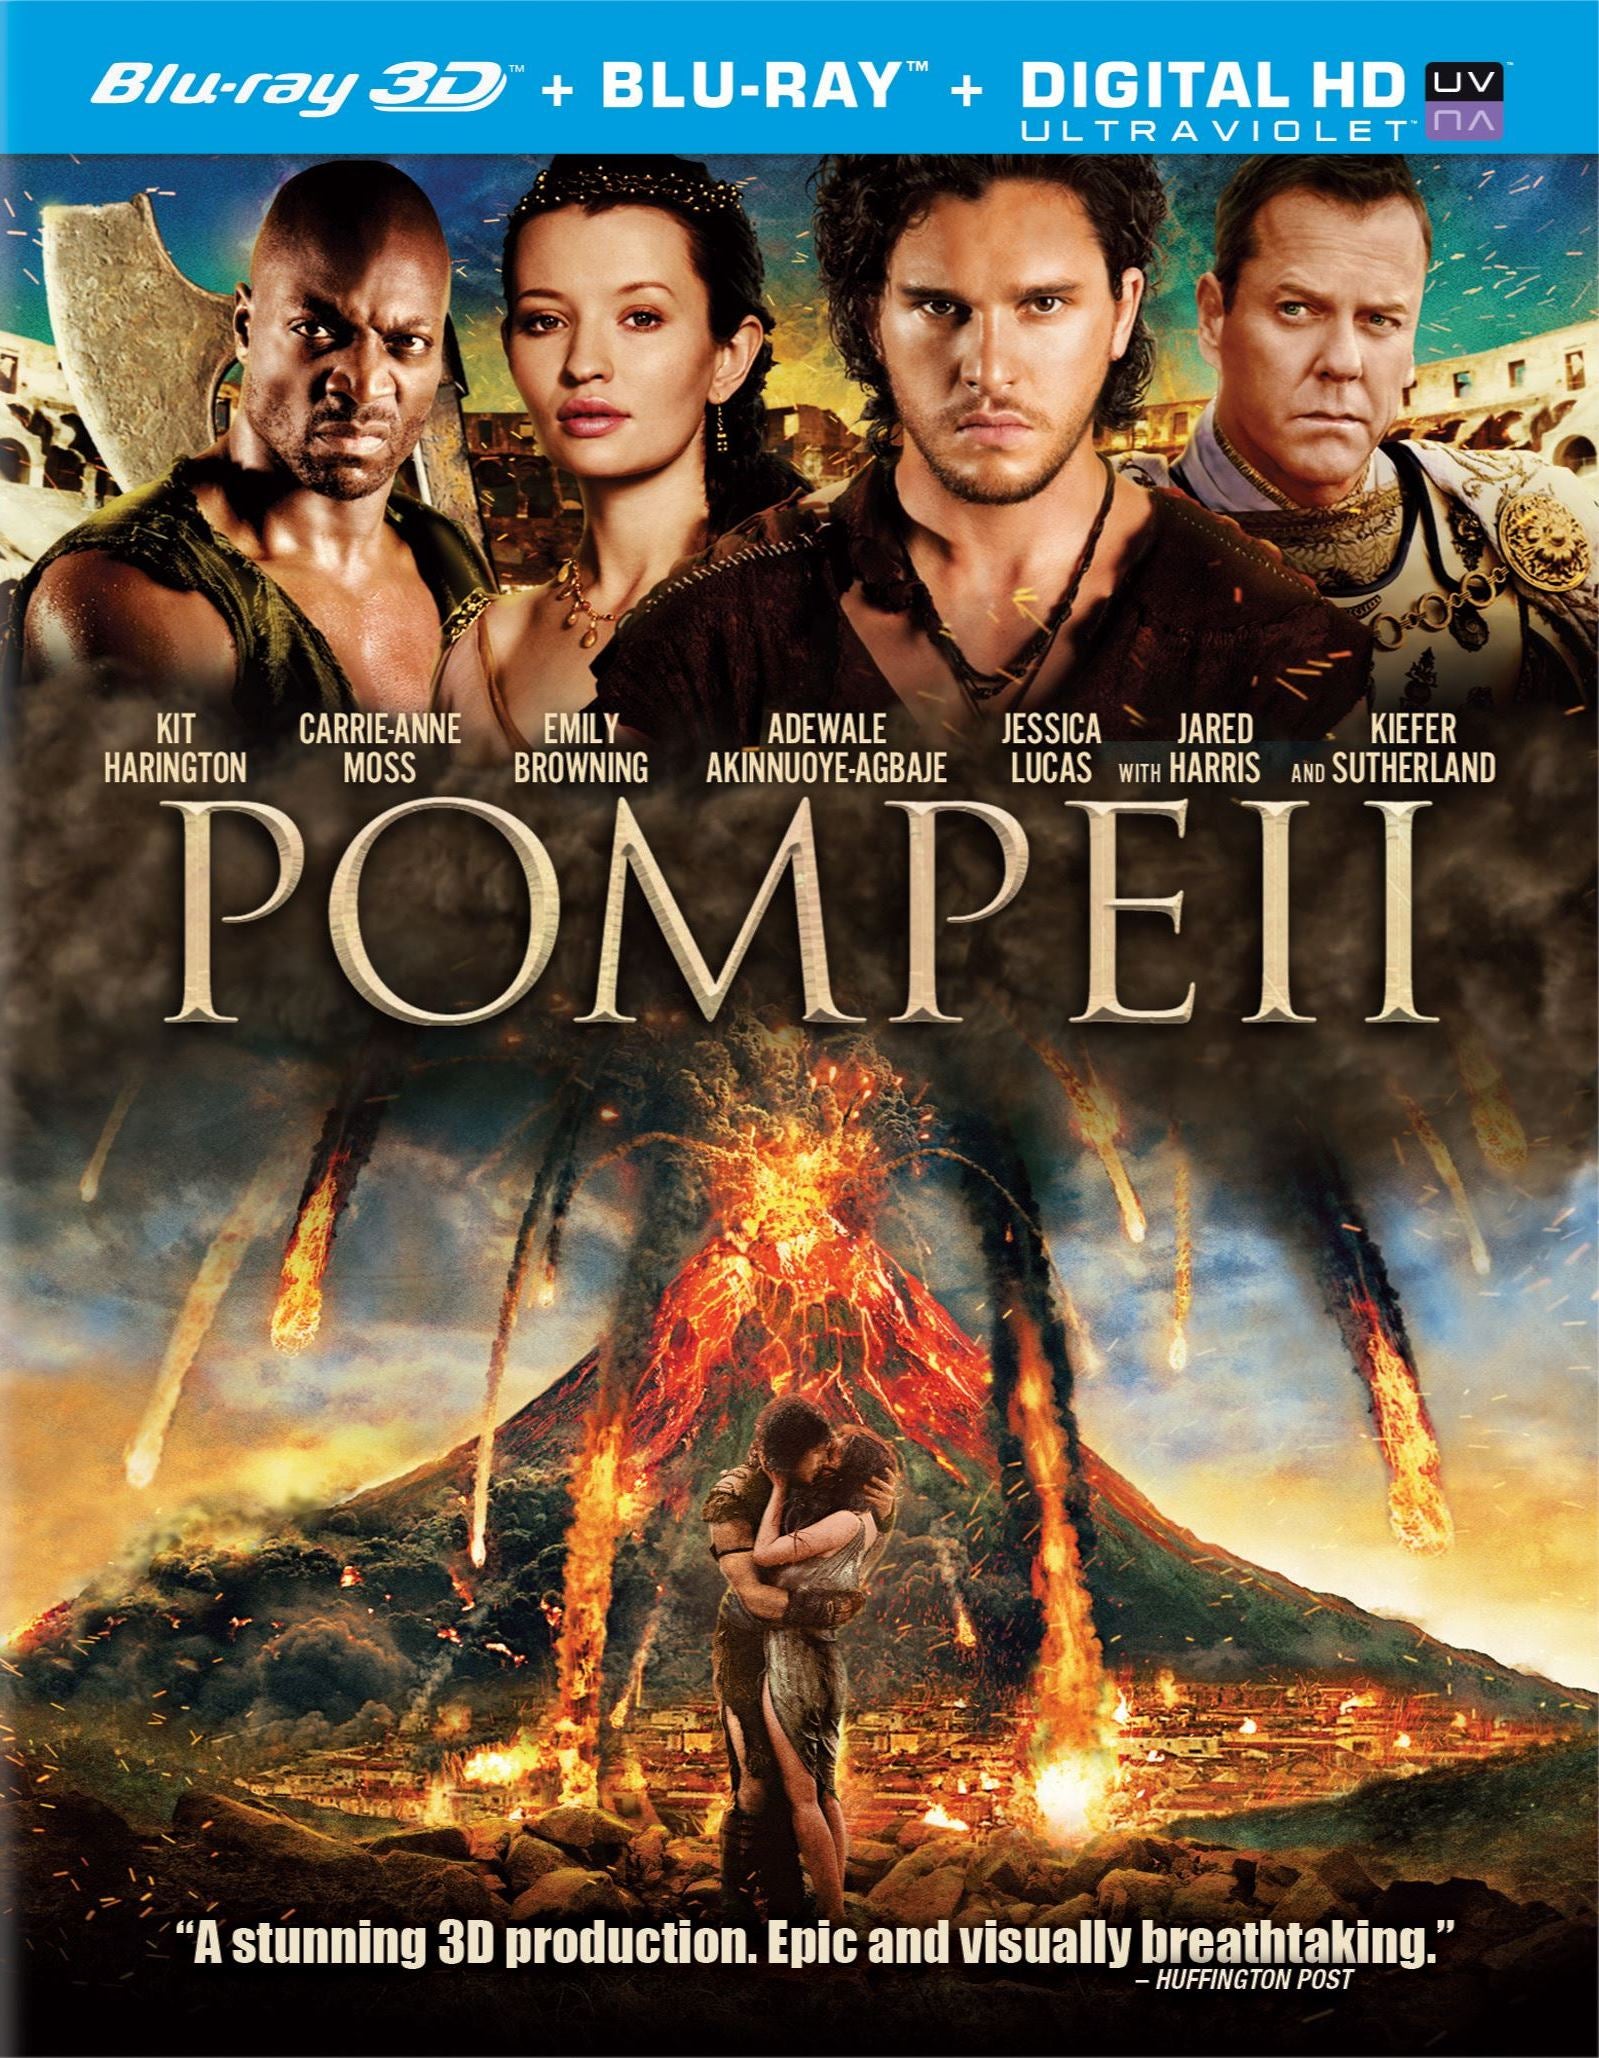 Pompeii [2 Discs] [Includes Digital Copy] [3D] [Blu-ray] cover art